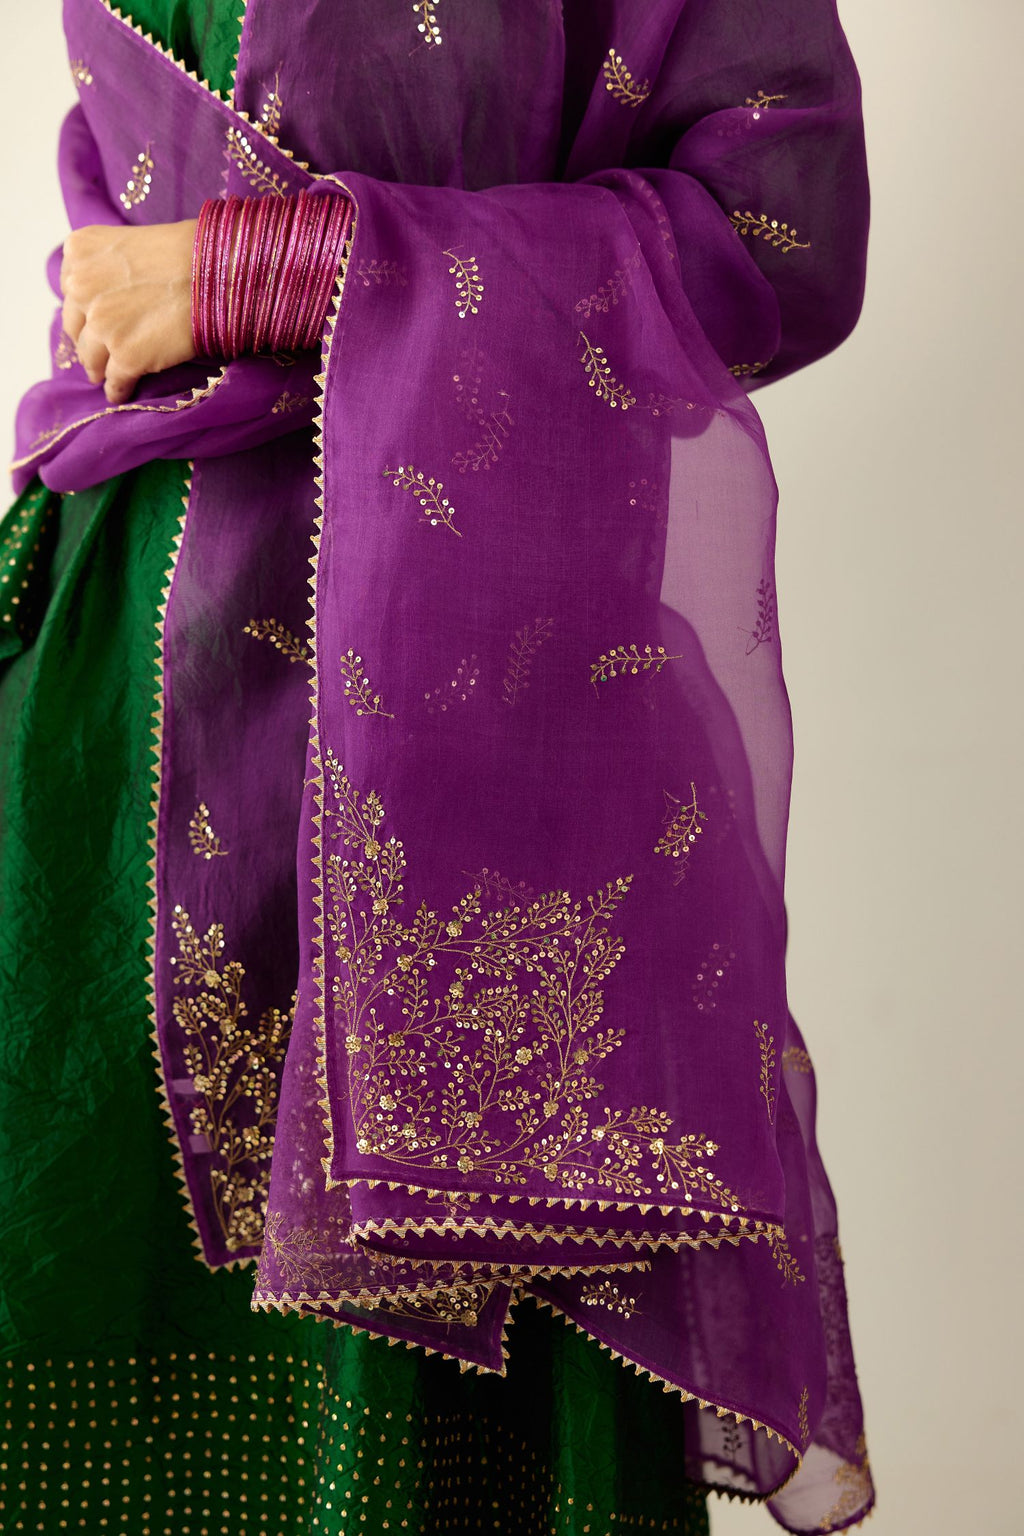 Dark green silk hand crushed easy fit straight hem kurta set, highlighted with a broad gold sequins border at hem.